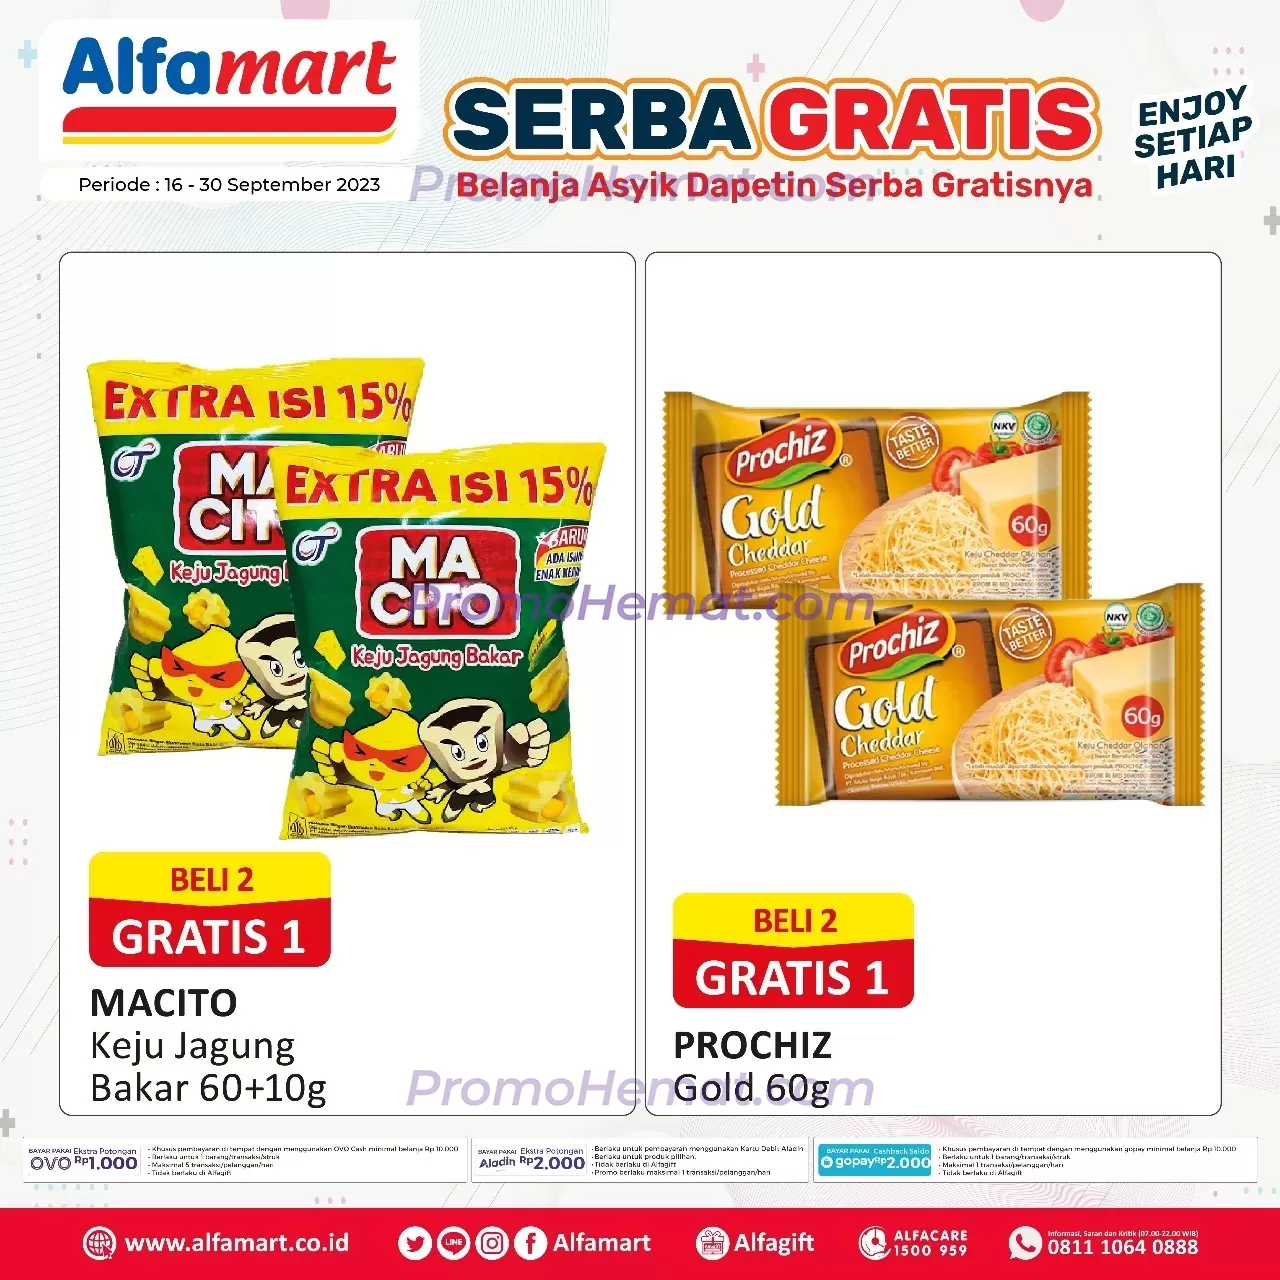 Promo Serba Gratis Alfamart Periode 16 - 30 September 2023 image_3